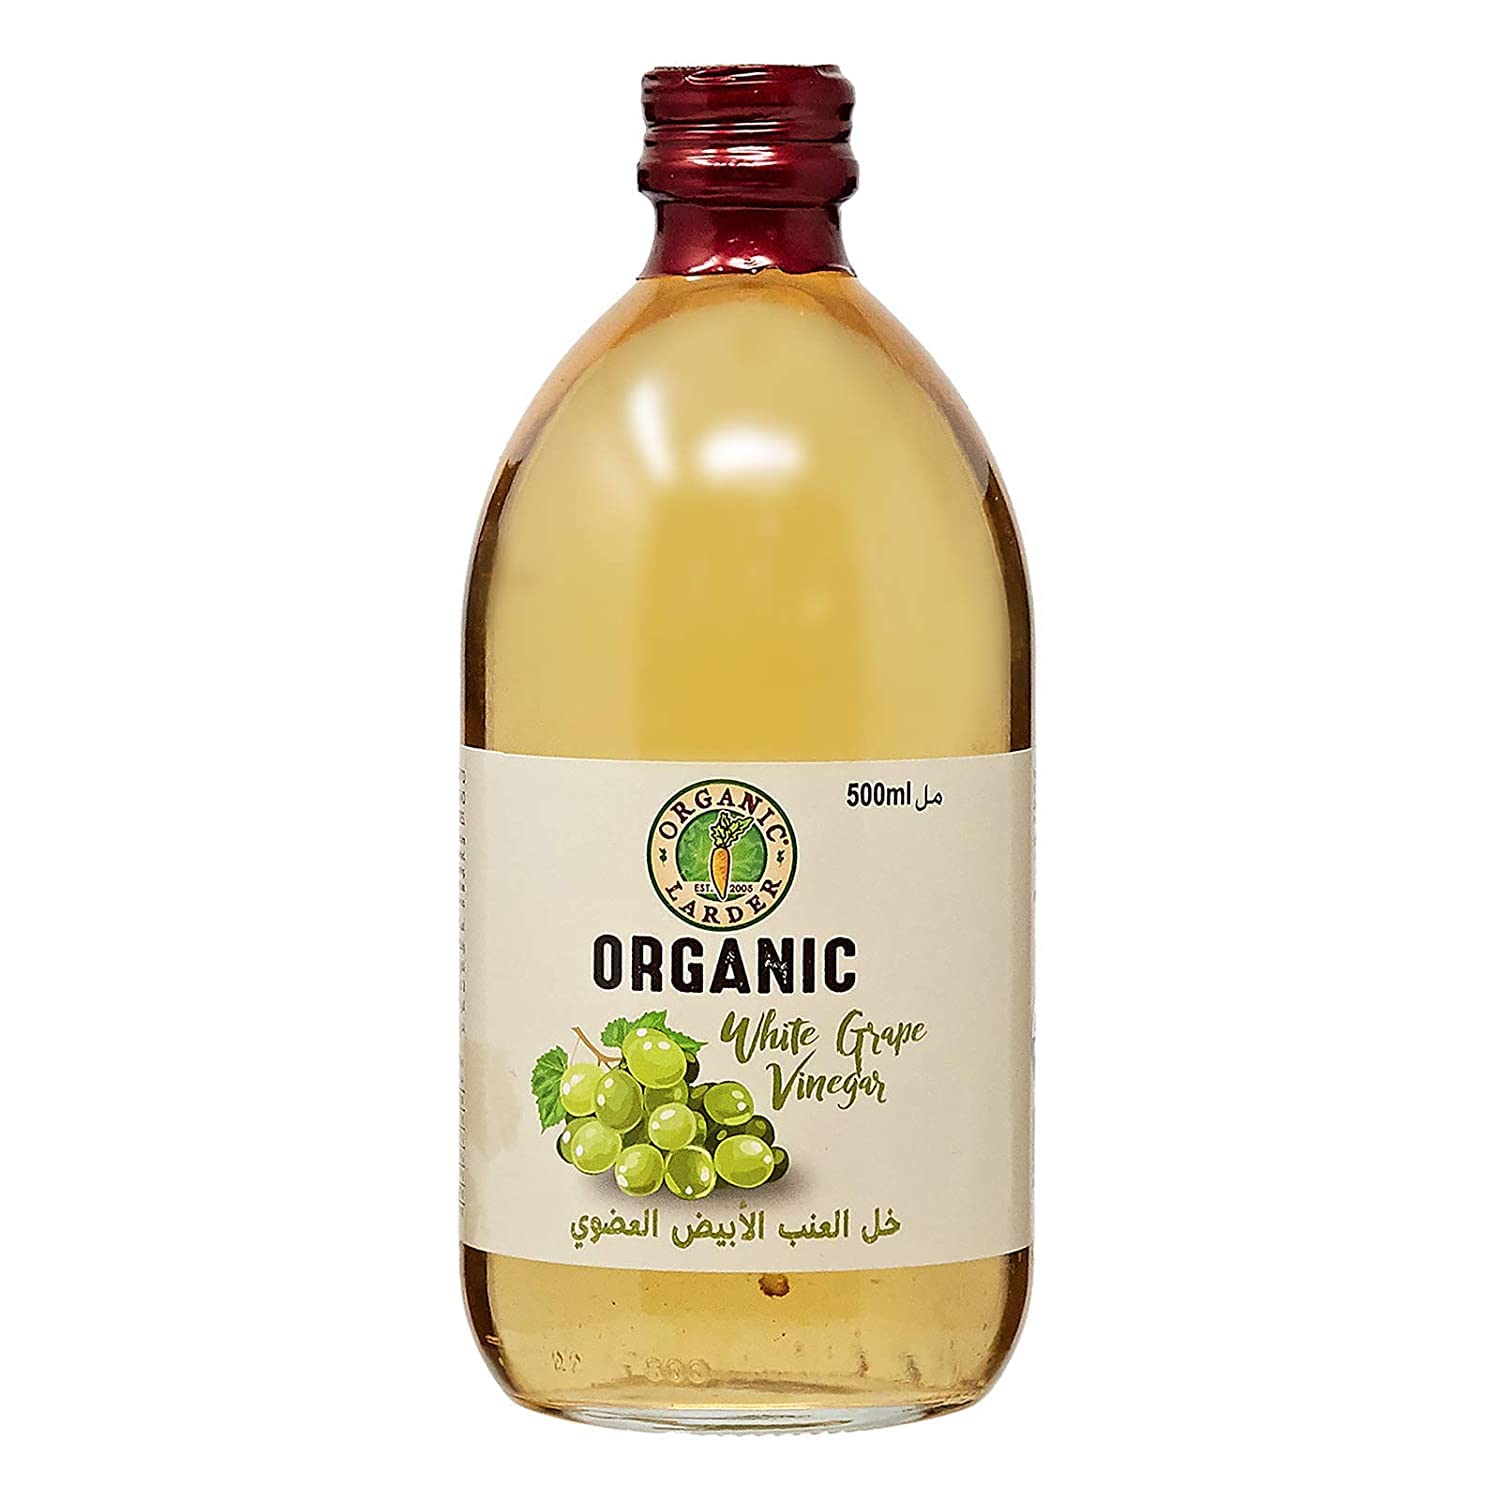 ORGANIC LARDER White Grape Vinegar, 500ml - Organic, Vegan, Natural